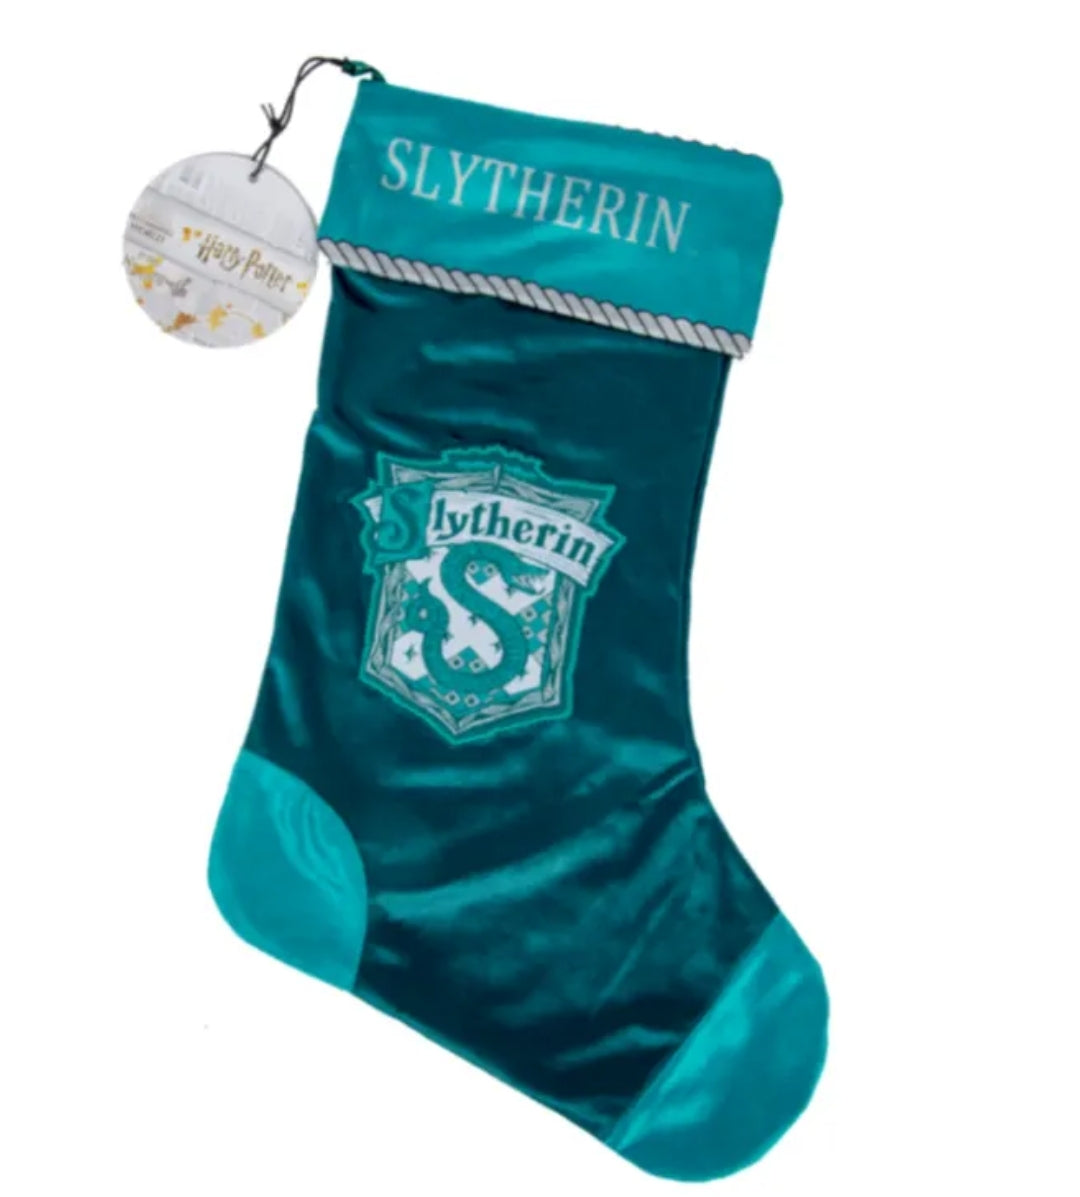 Harry Potter Christmas stockings